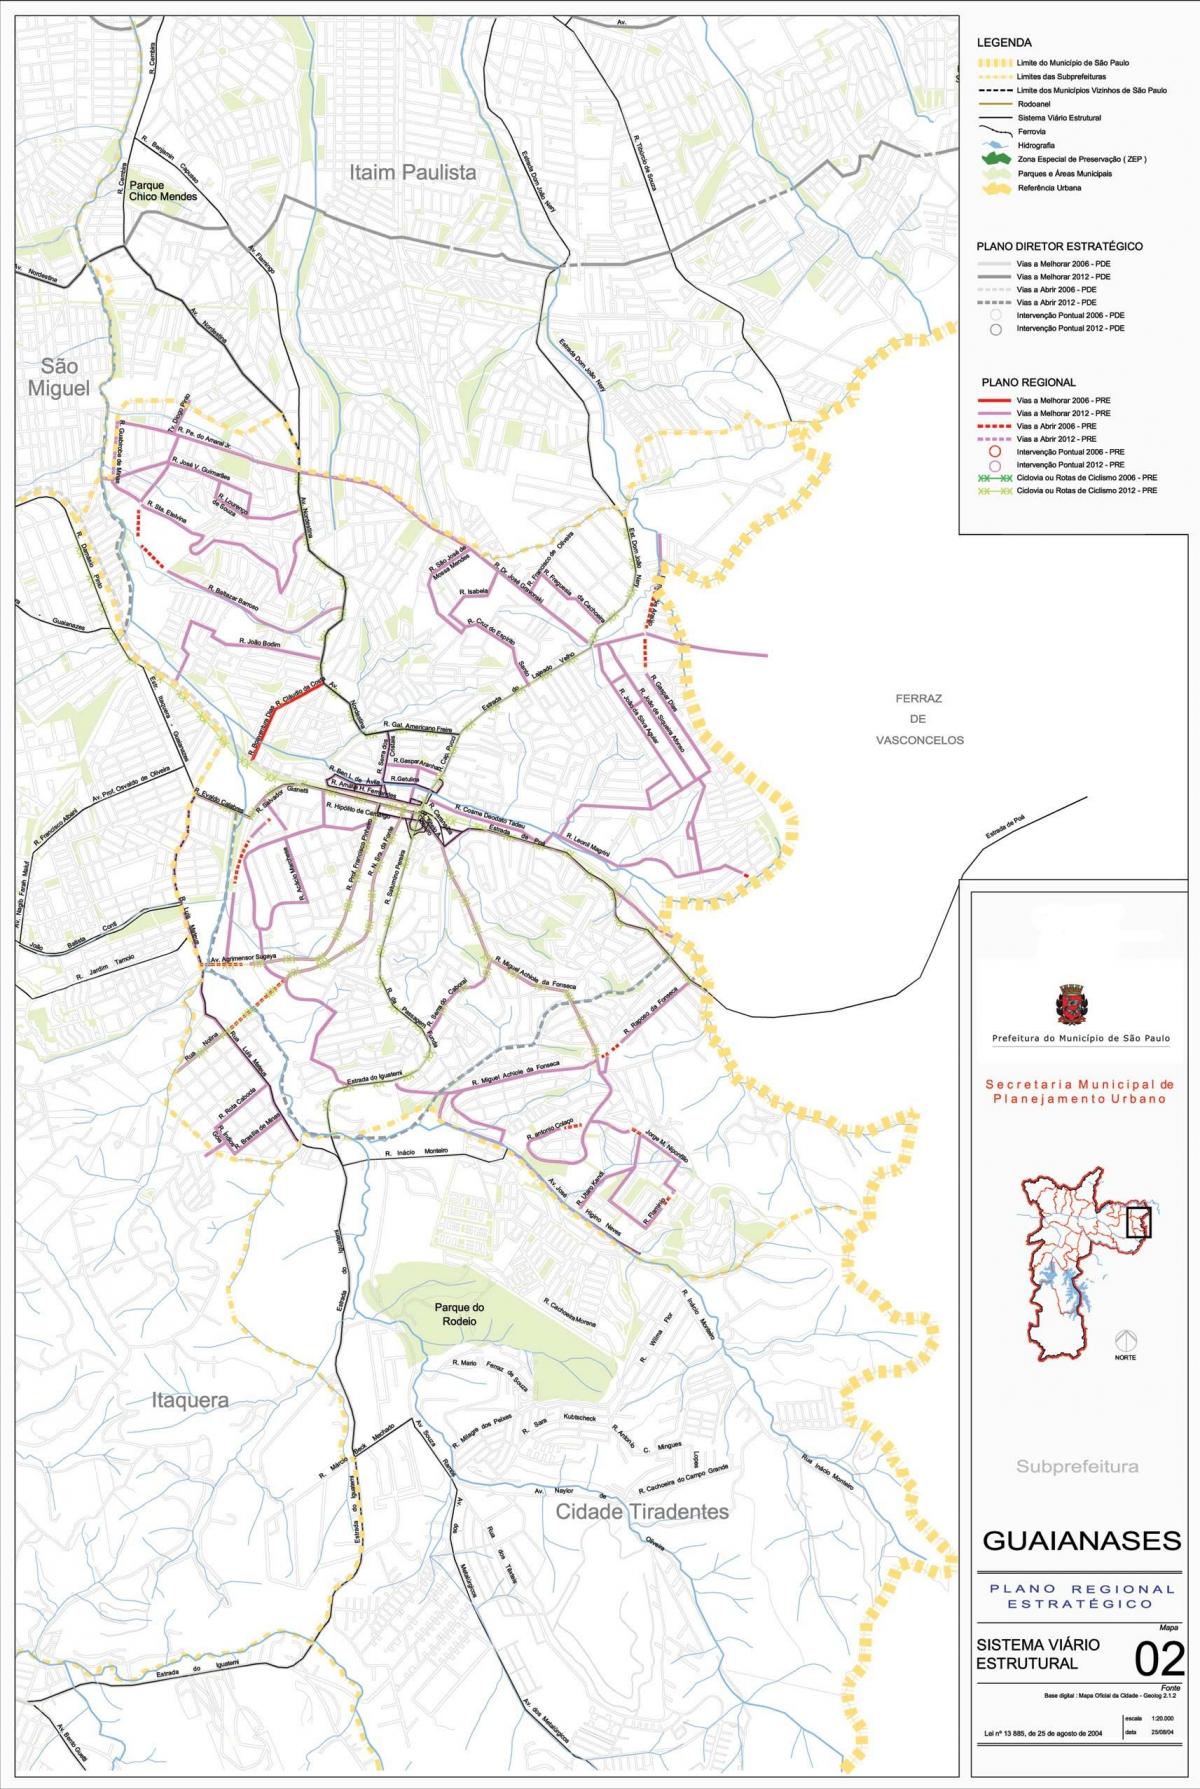 Mapa de Guaianases São Paulo - Carreteras